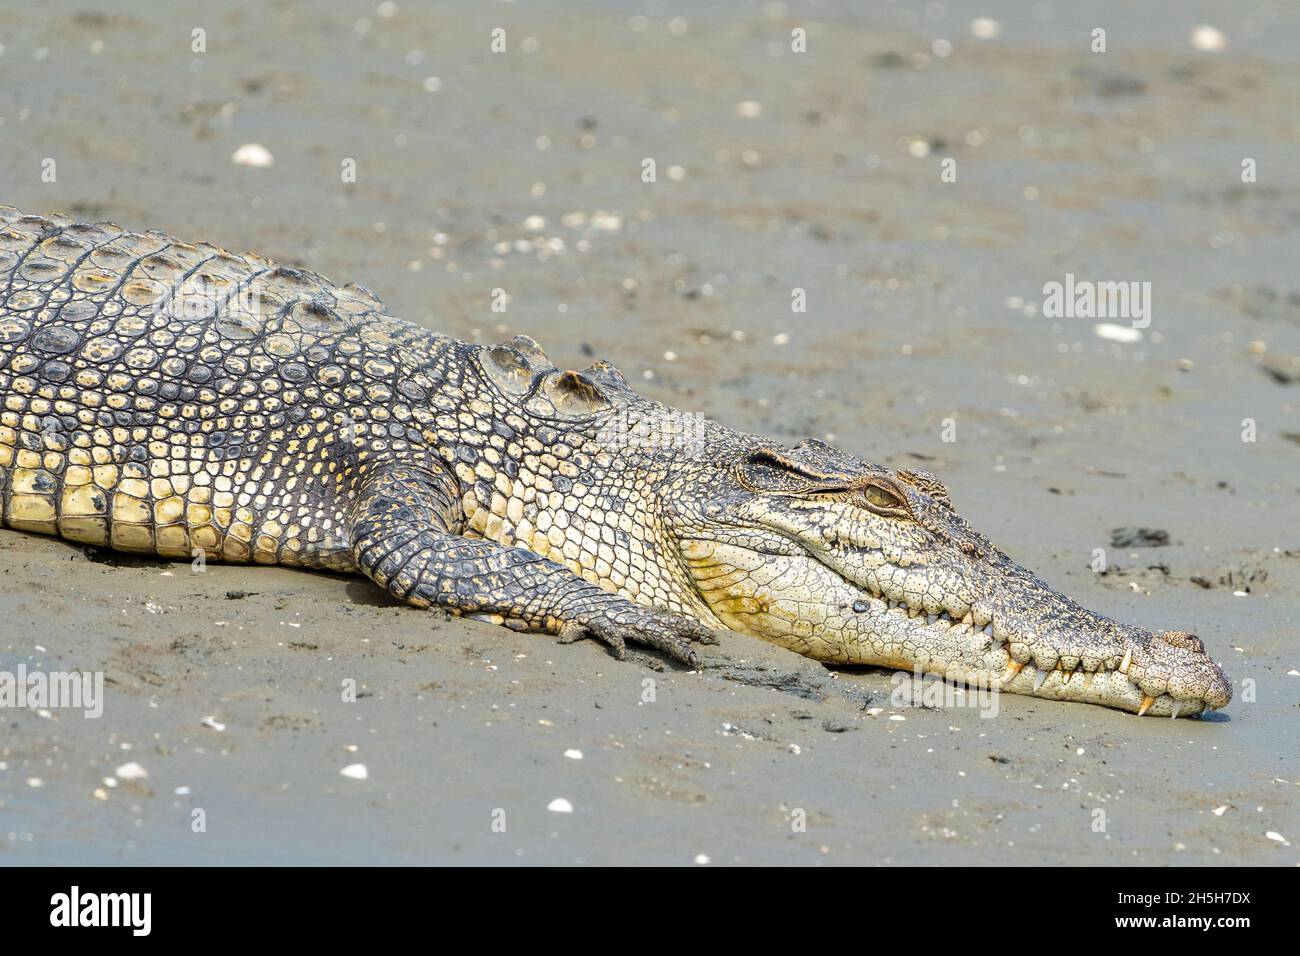 Estuarine crocodile or saltwater crocodile (Crocodylus porosus) sunning itself on mud flat at low tide. North Queensland, Australia Stock Photo